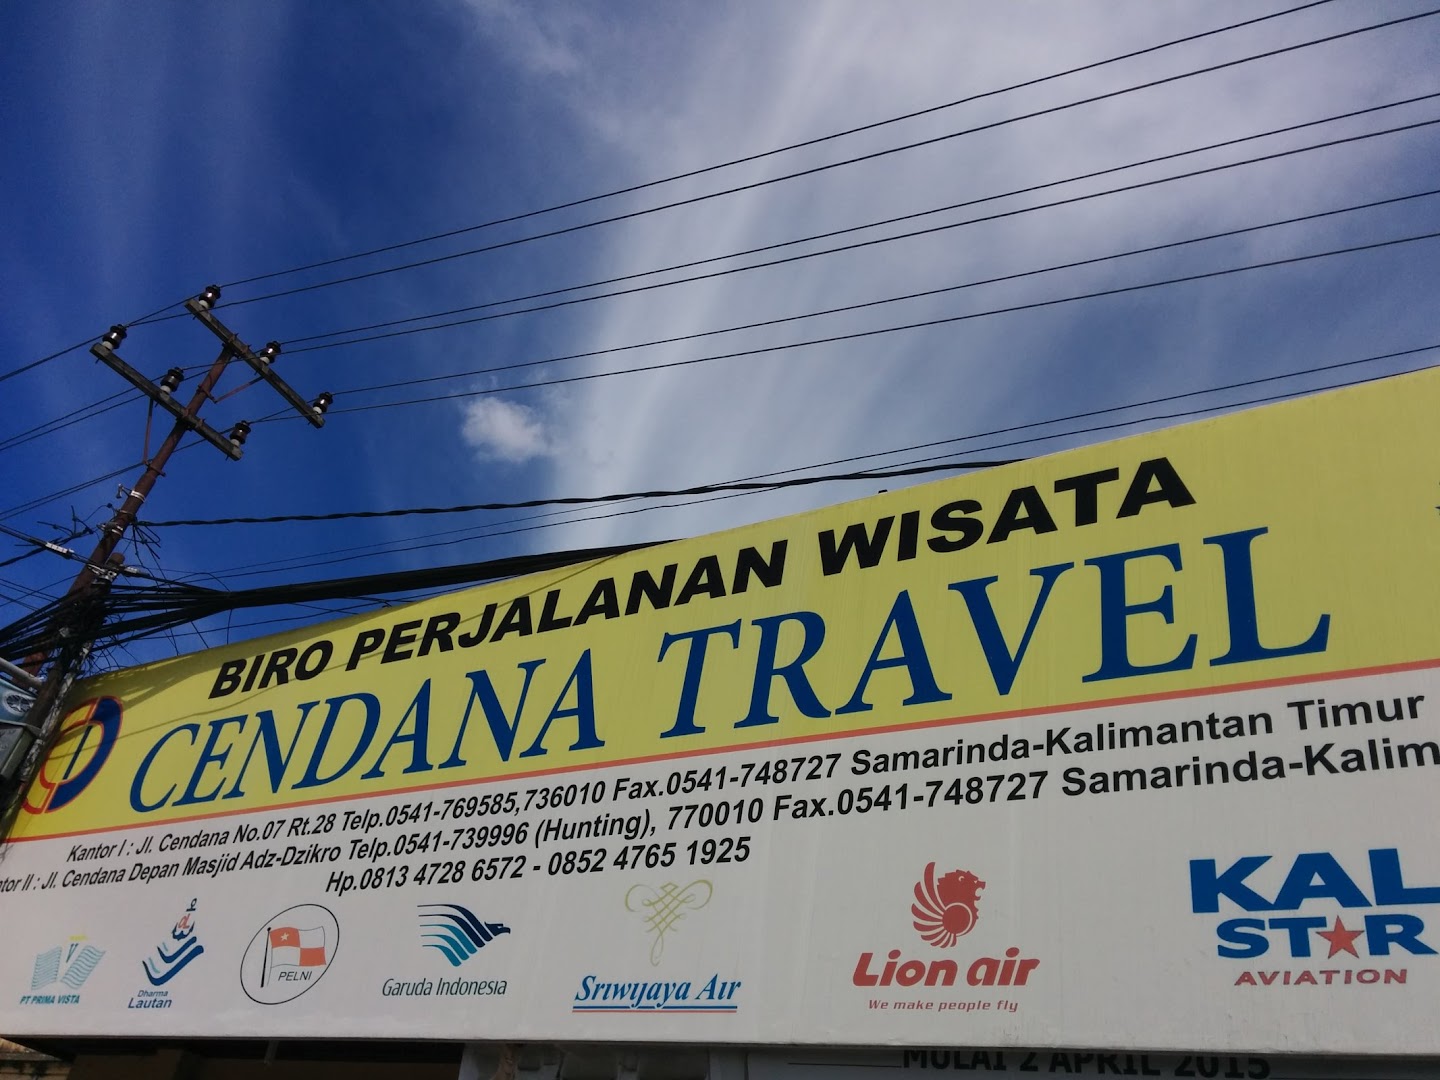 Cendana Travel Photo